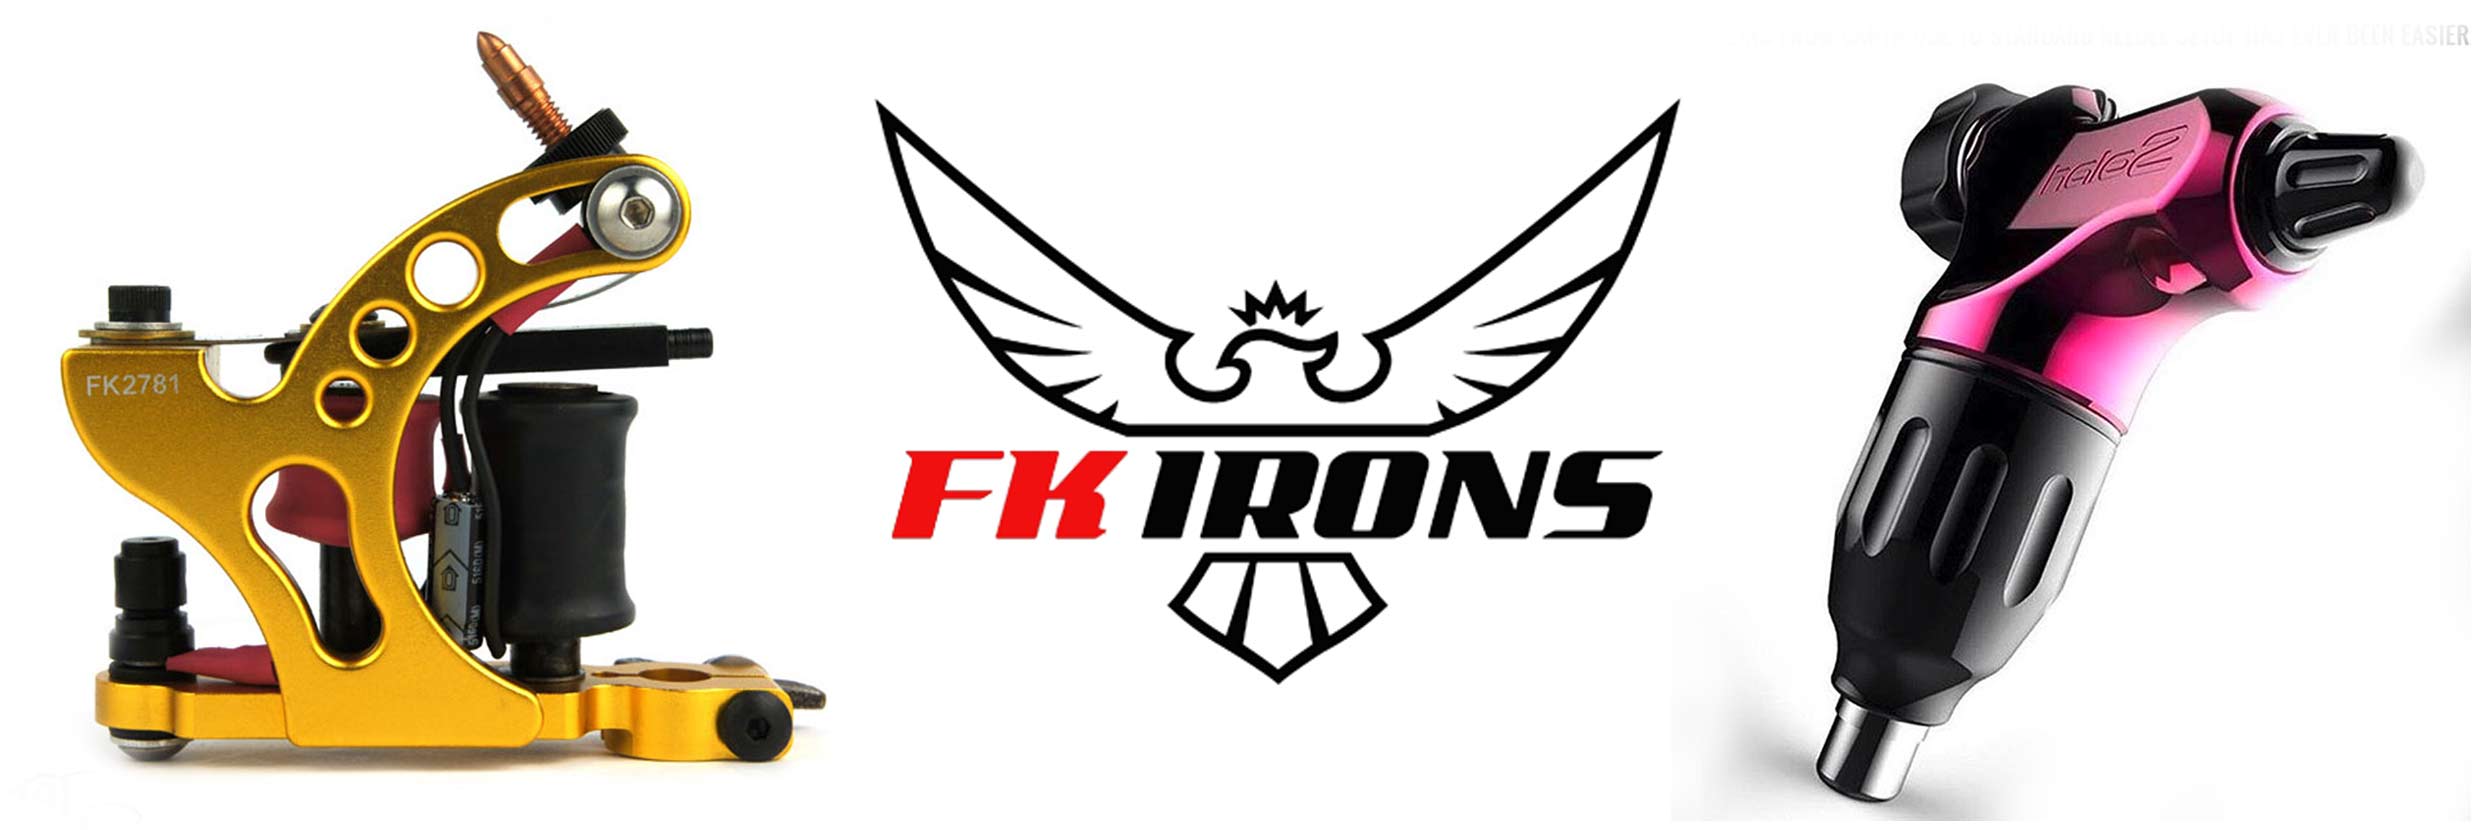 Fk irons1